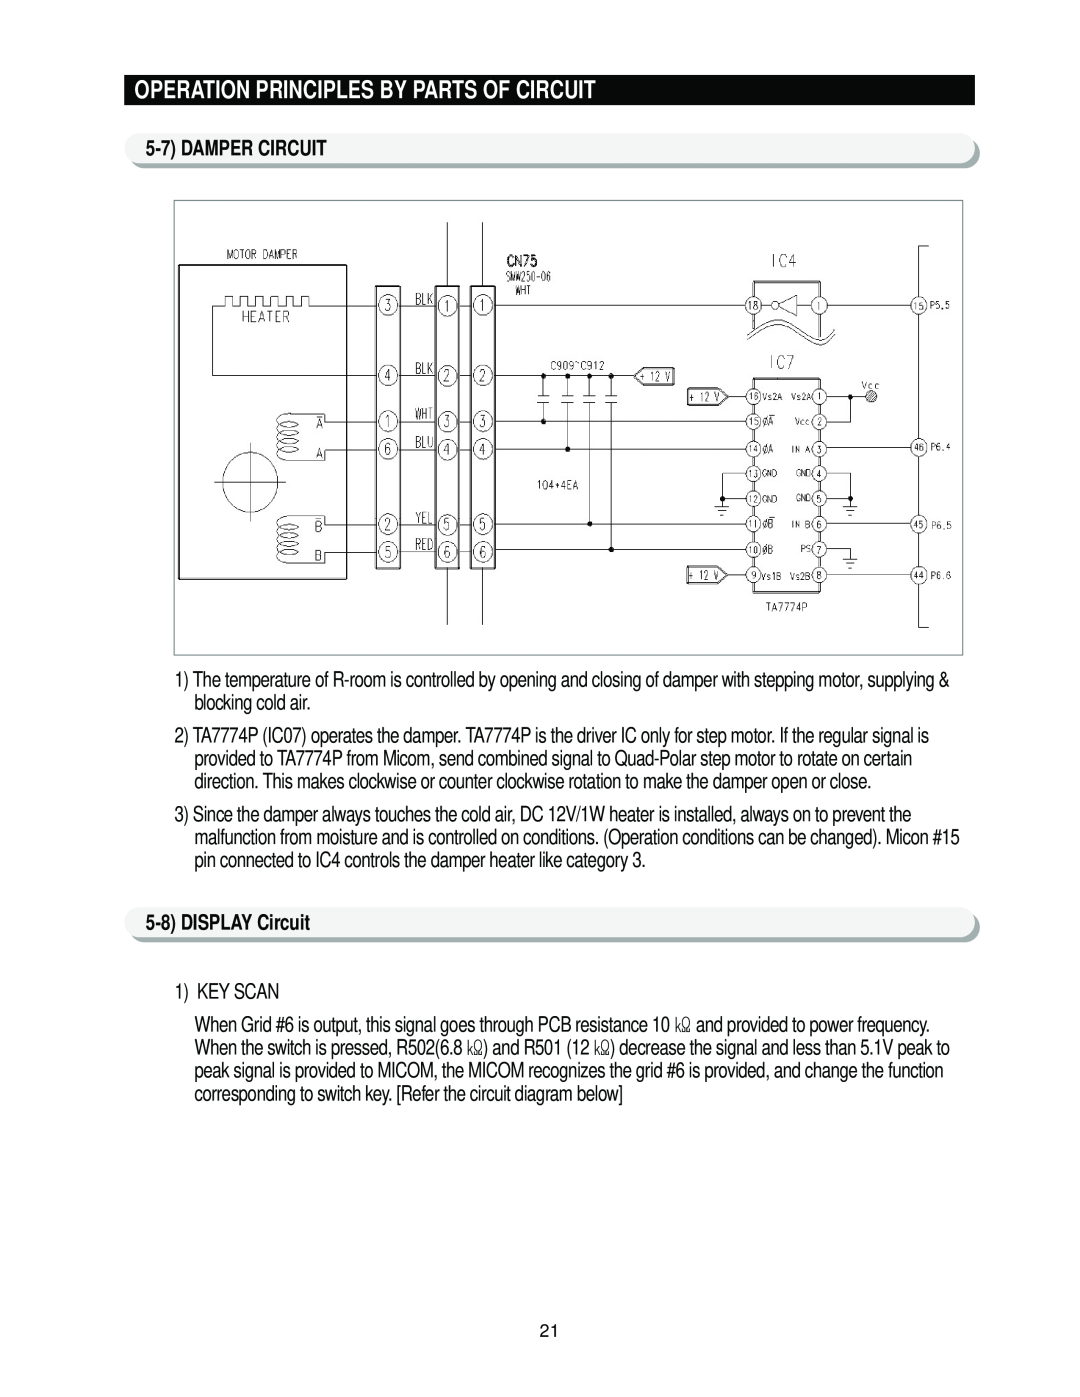 Samsung RS2*3* manual 5-7DAMPER CIRCUIT, 5-8DISPLAY Circuit, Operation Principles By Parts Of Circuit, Key Scan 